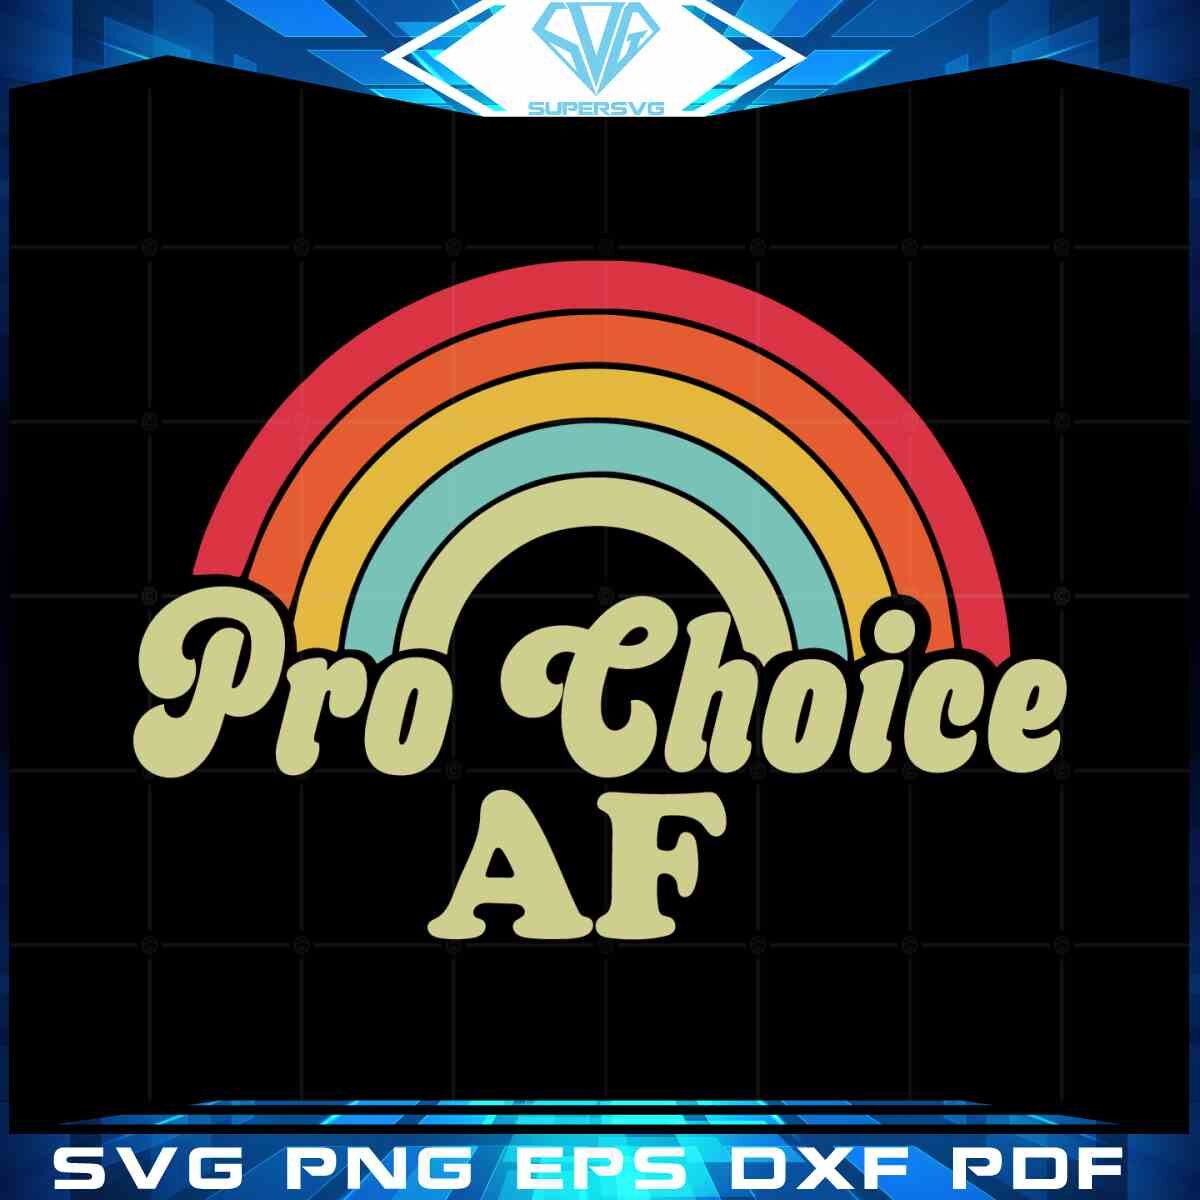 vintage-pro-choice-retro-1973-defend-svg-cutting-files